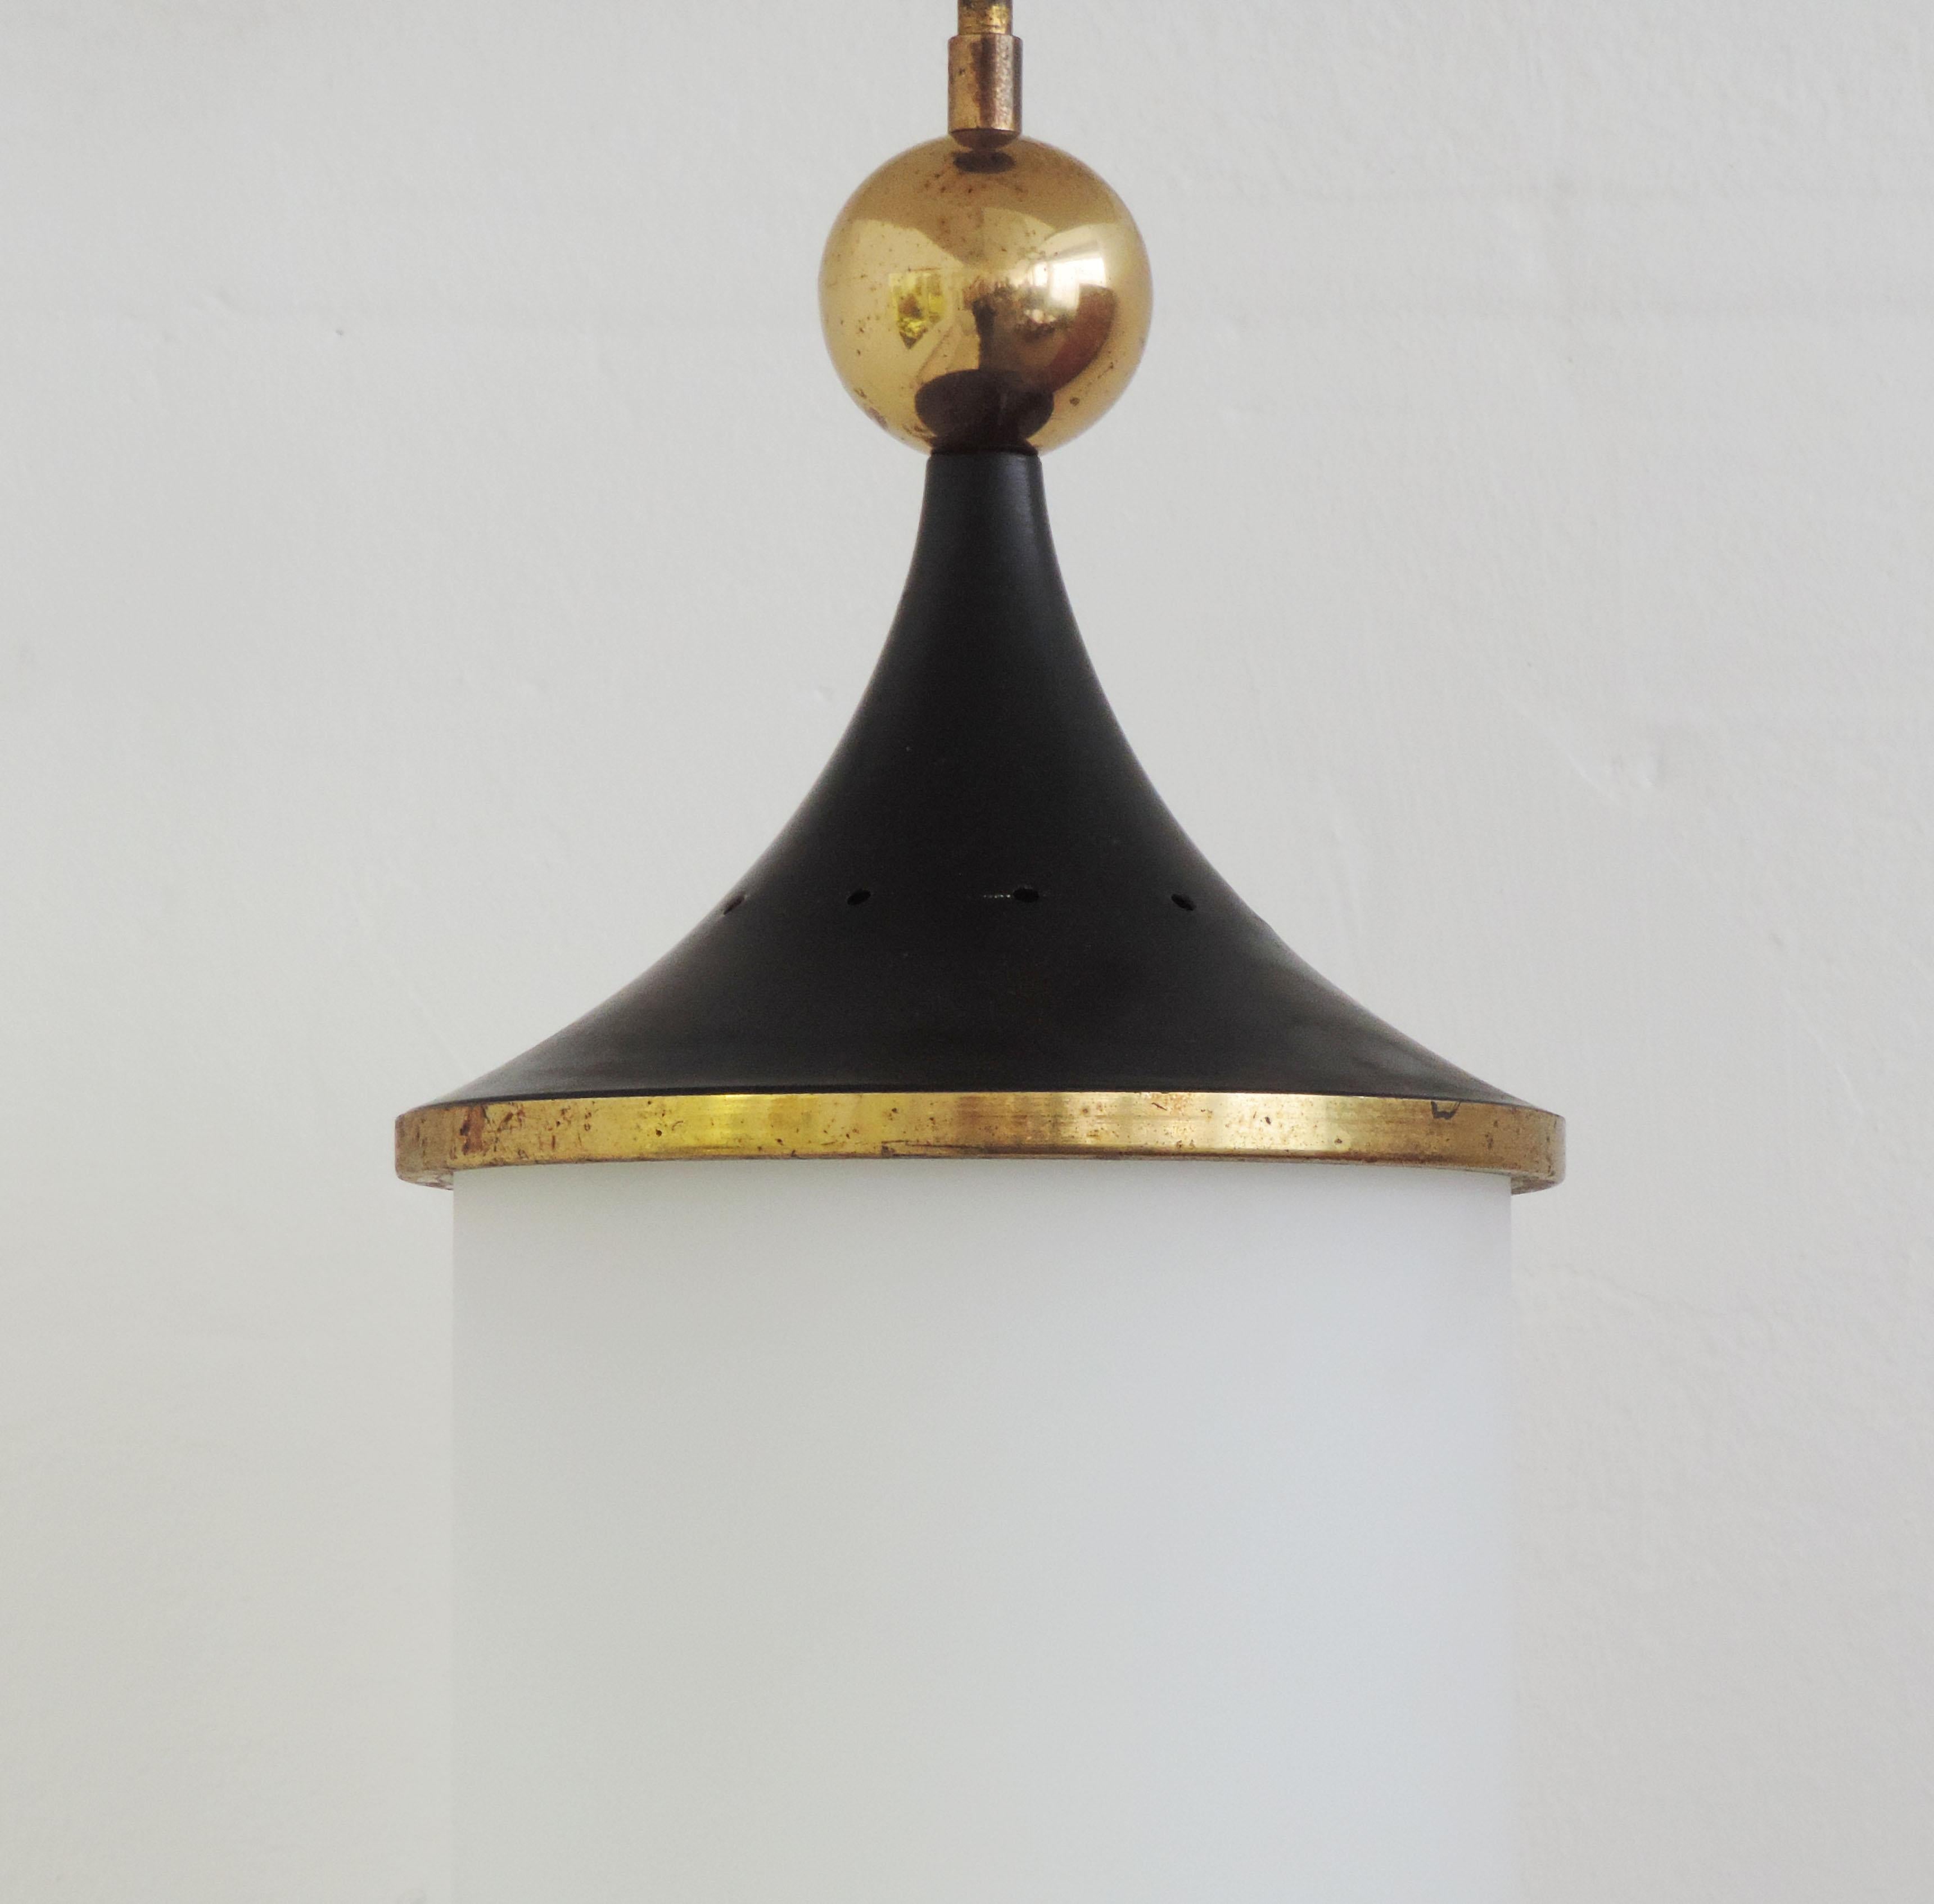 Splendid Italian 1950s Brass Pendant attributed to Oscar Torlasco for Lumi.
Carries 3 Small Screw Internal Light Bulbs.